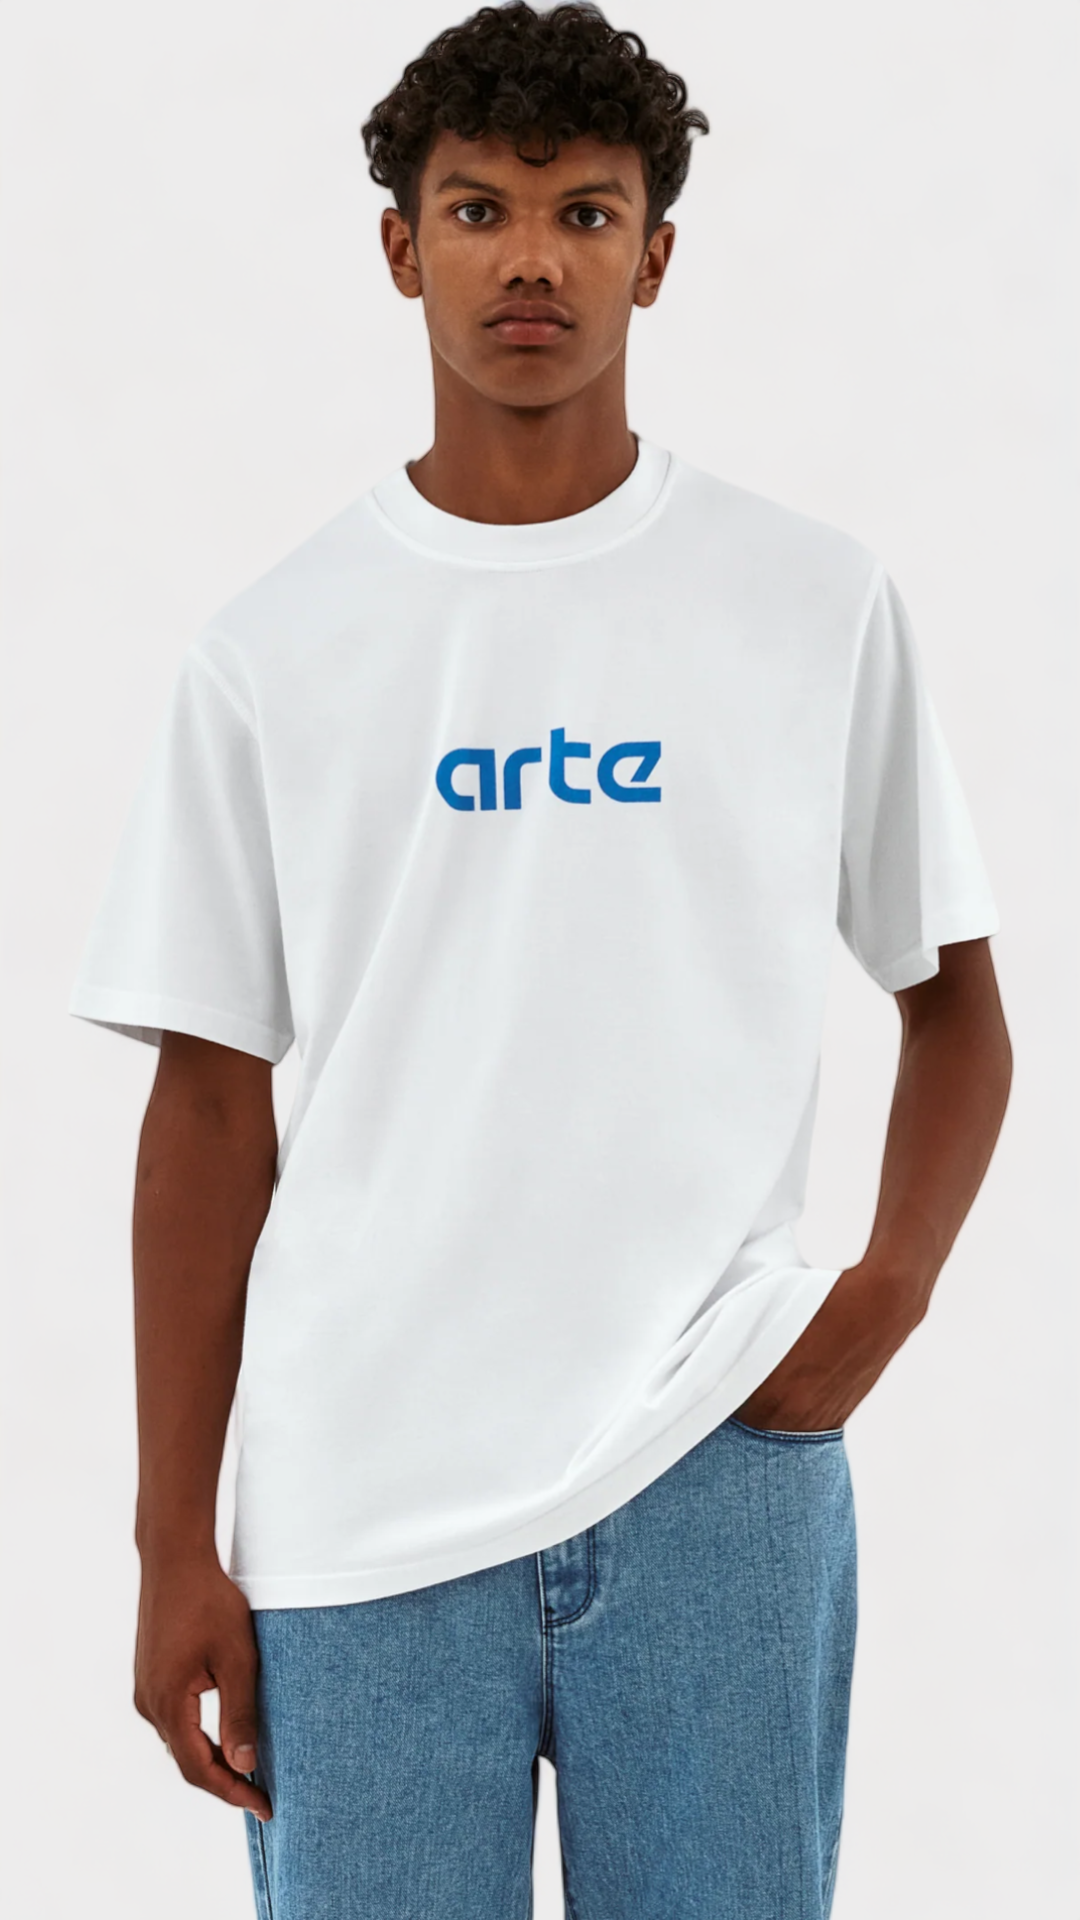 Teo Arte T-shirt